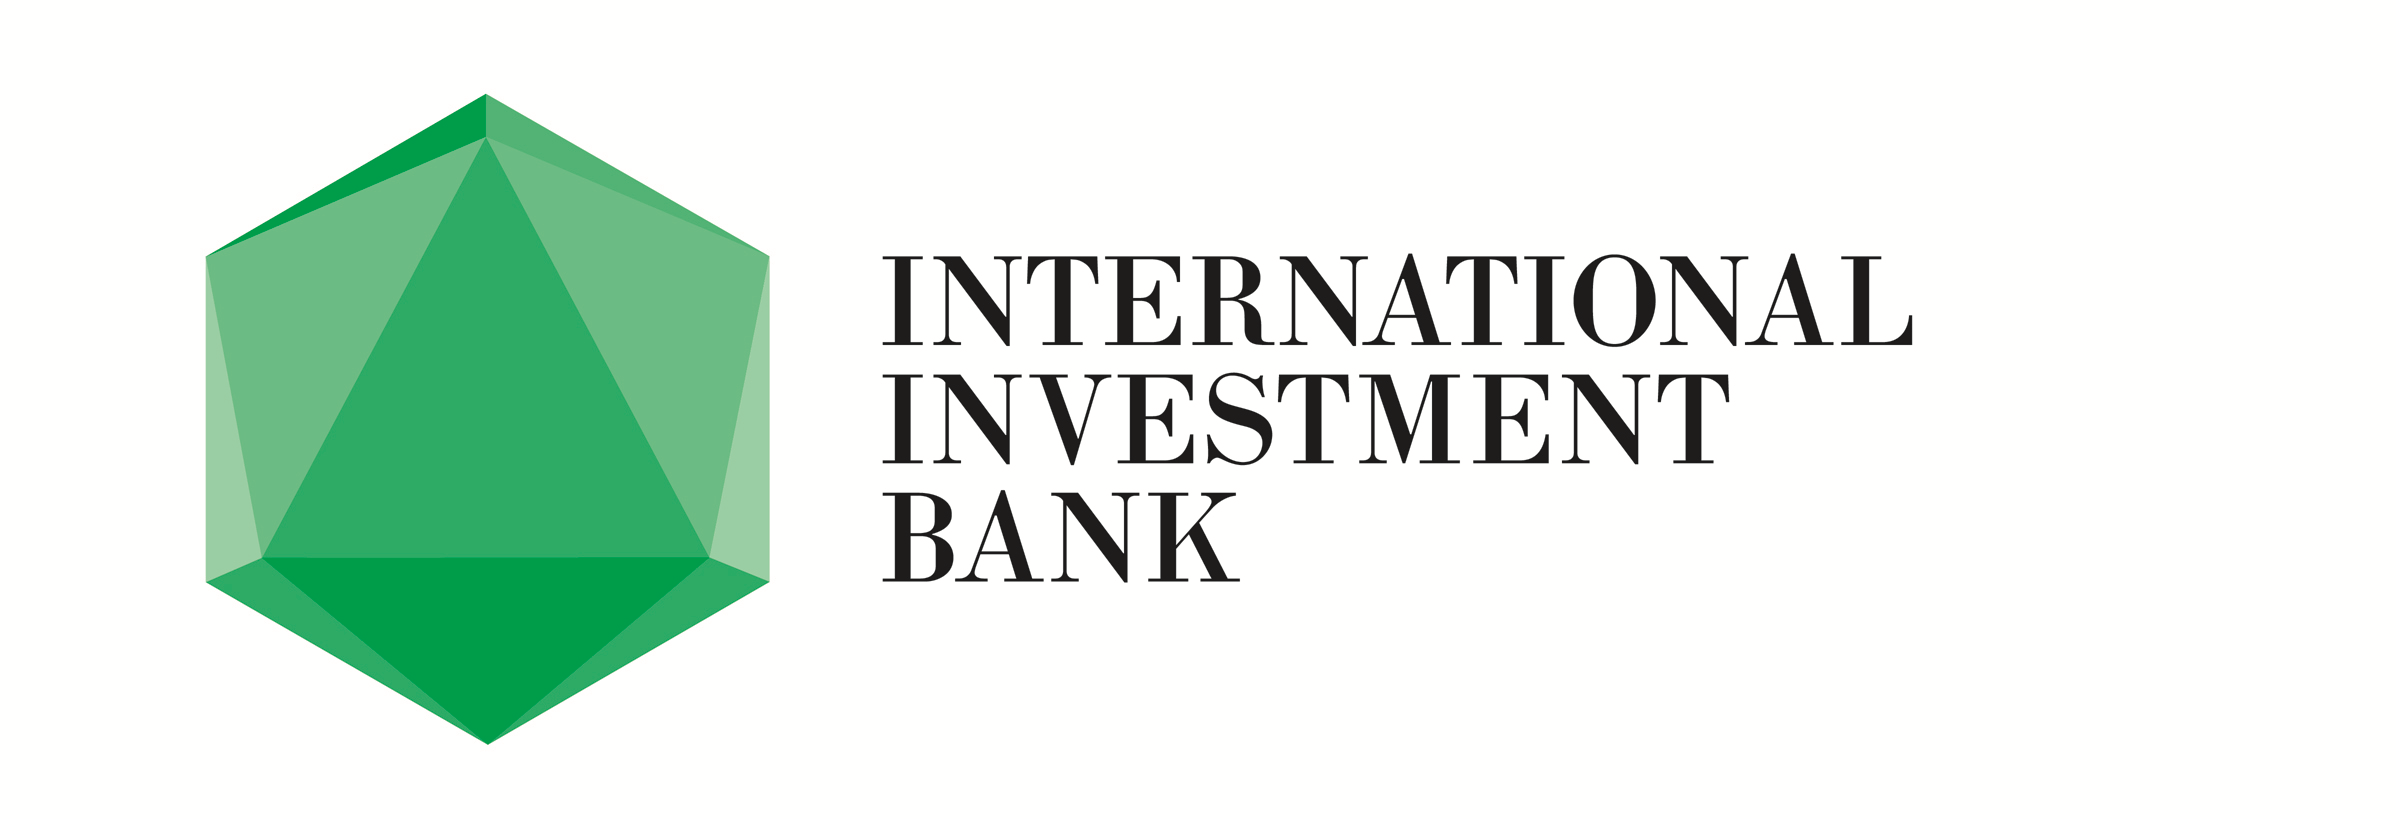 Investment Banking Logo - International Investment Bank (IIB) | Logo